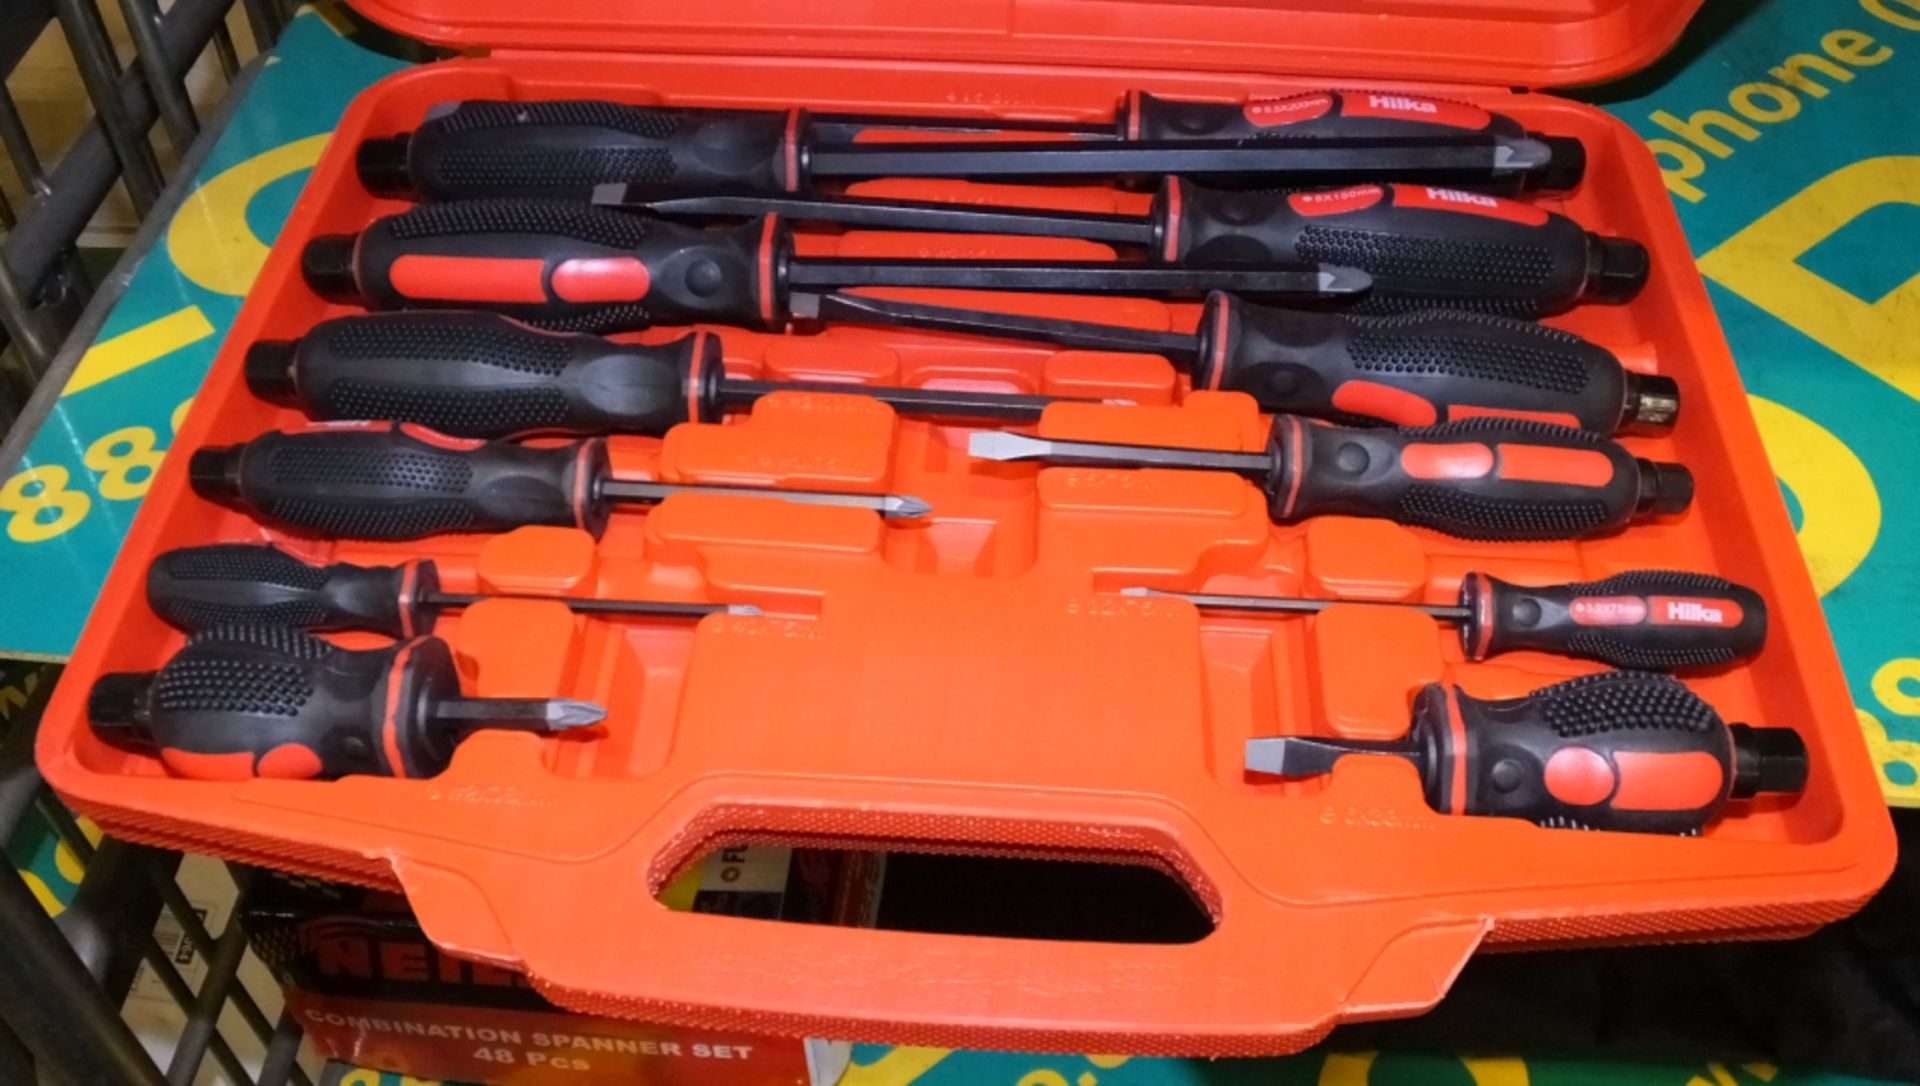 Hilka 12 piece Mechanics heavy duty screwdriver set with S2 steel blades - Image 2 of 2